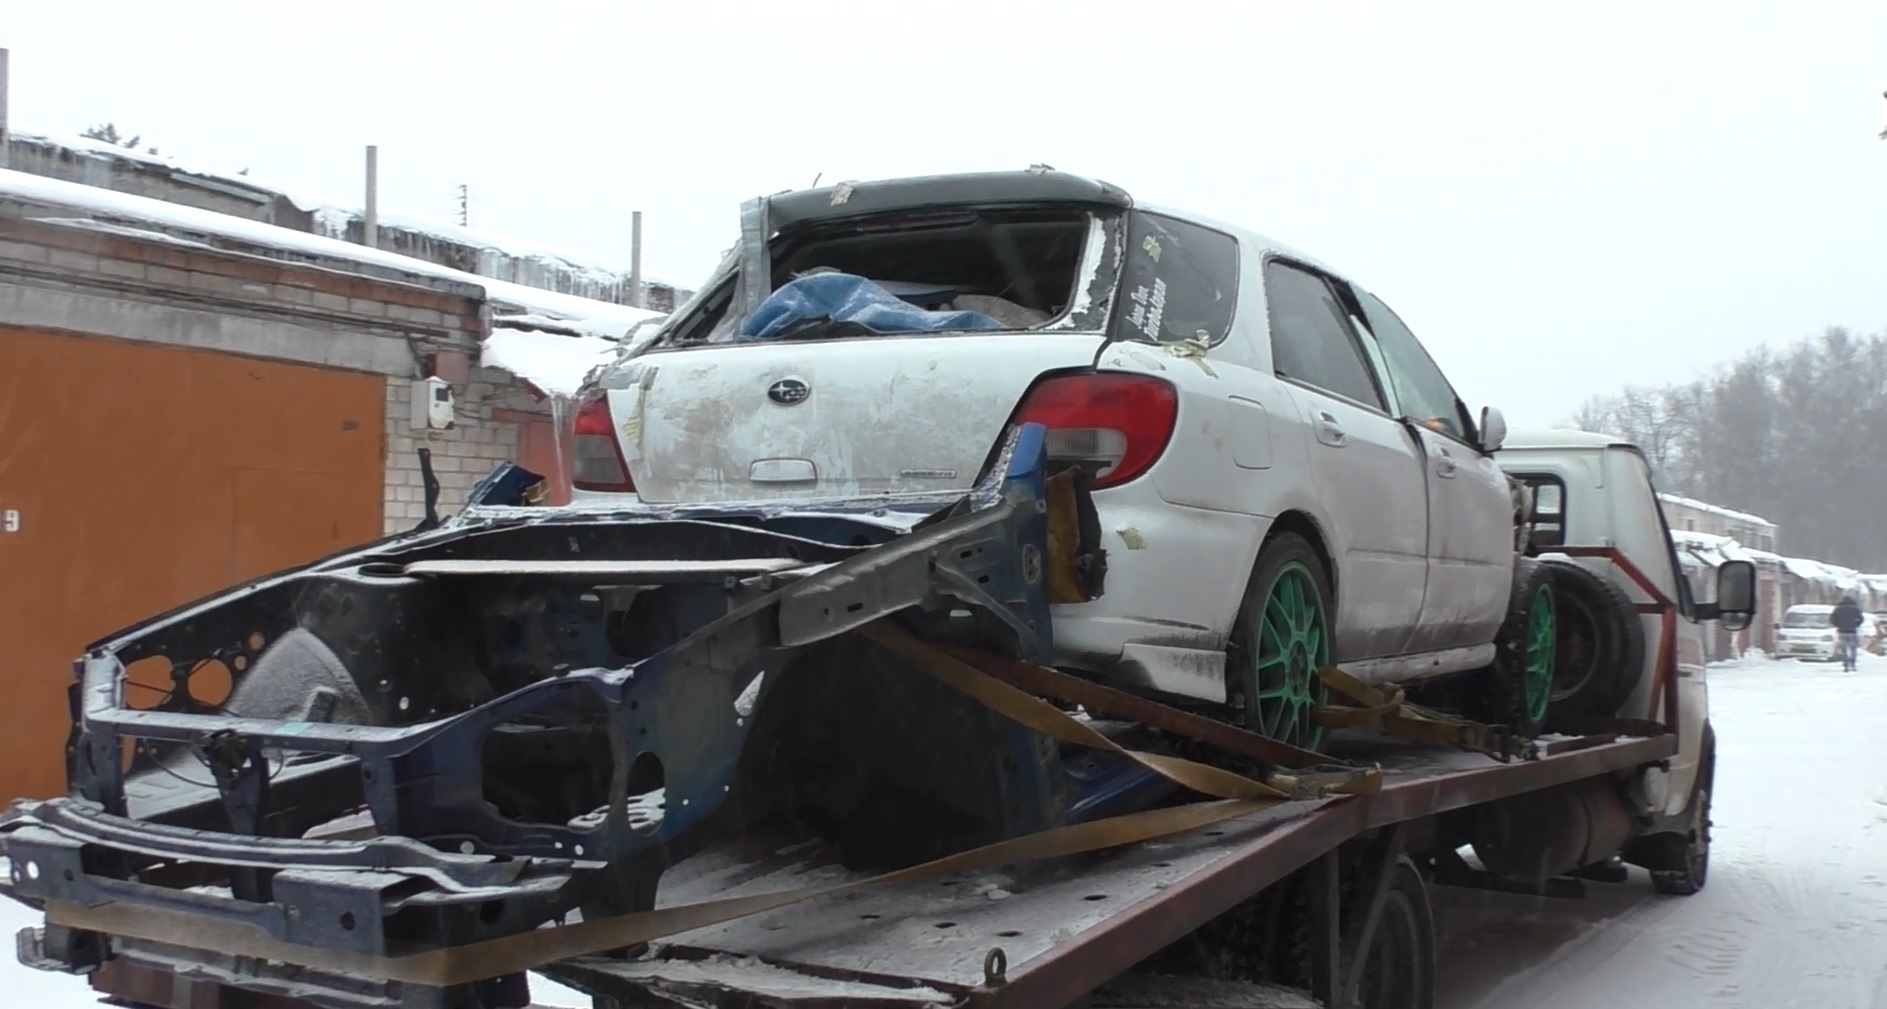 Subaru Impreza repair after an accident PHOTO - My, Subaru, Subaru impreza, Auto, Road accident, Crash, Autoselection, Repair, Garage, Video, Longpost